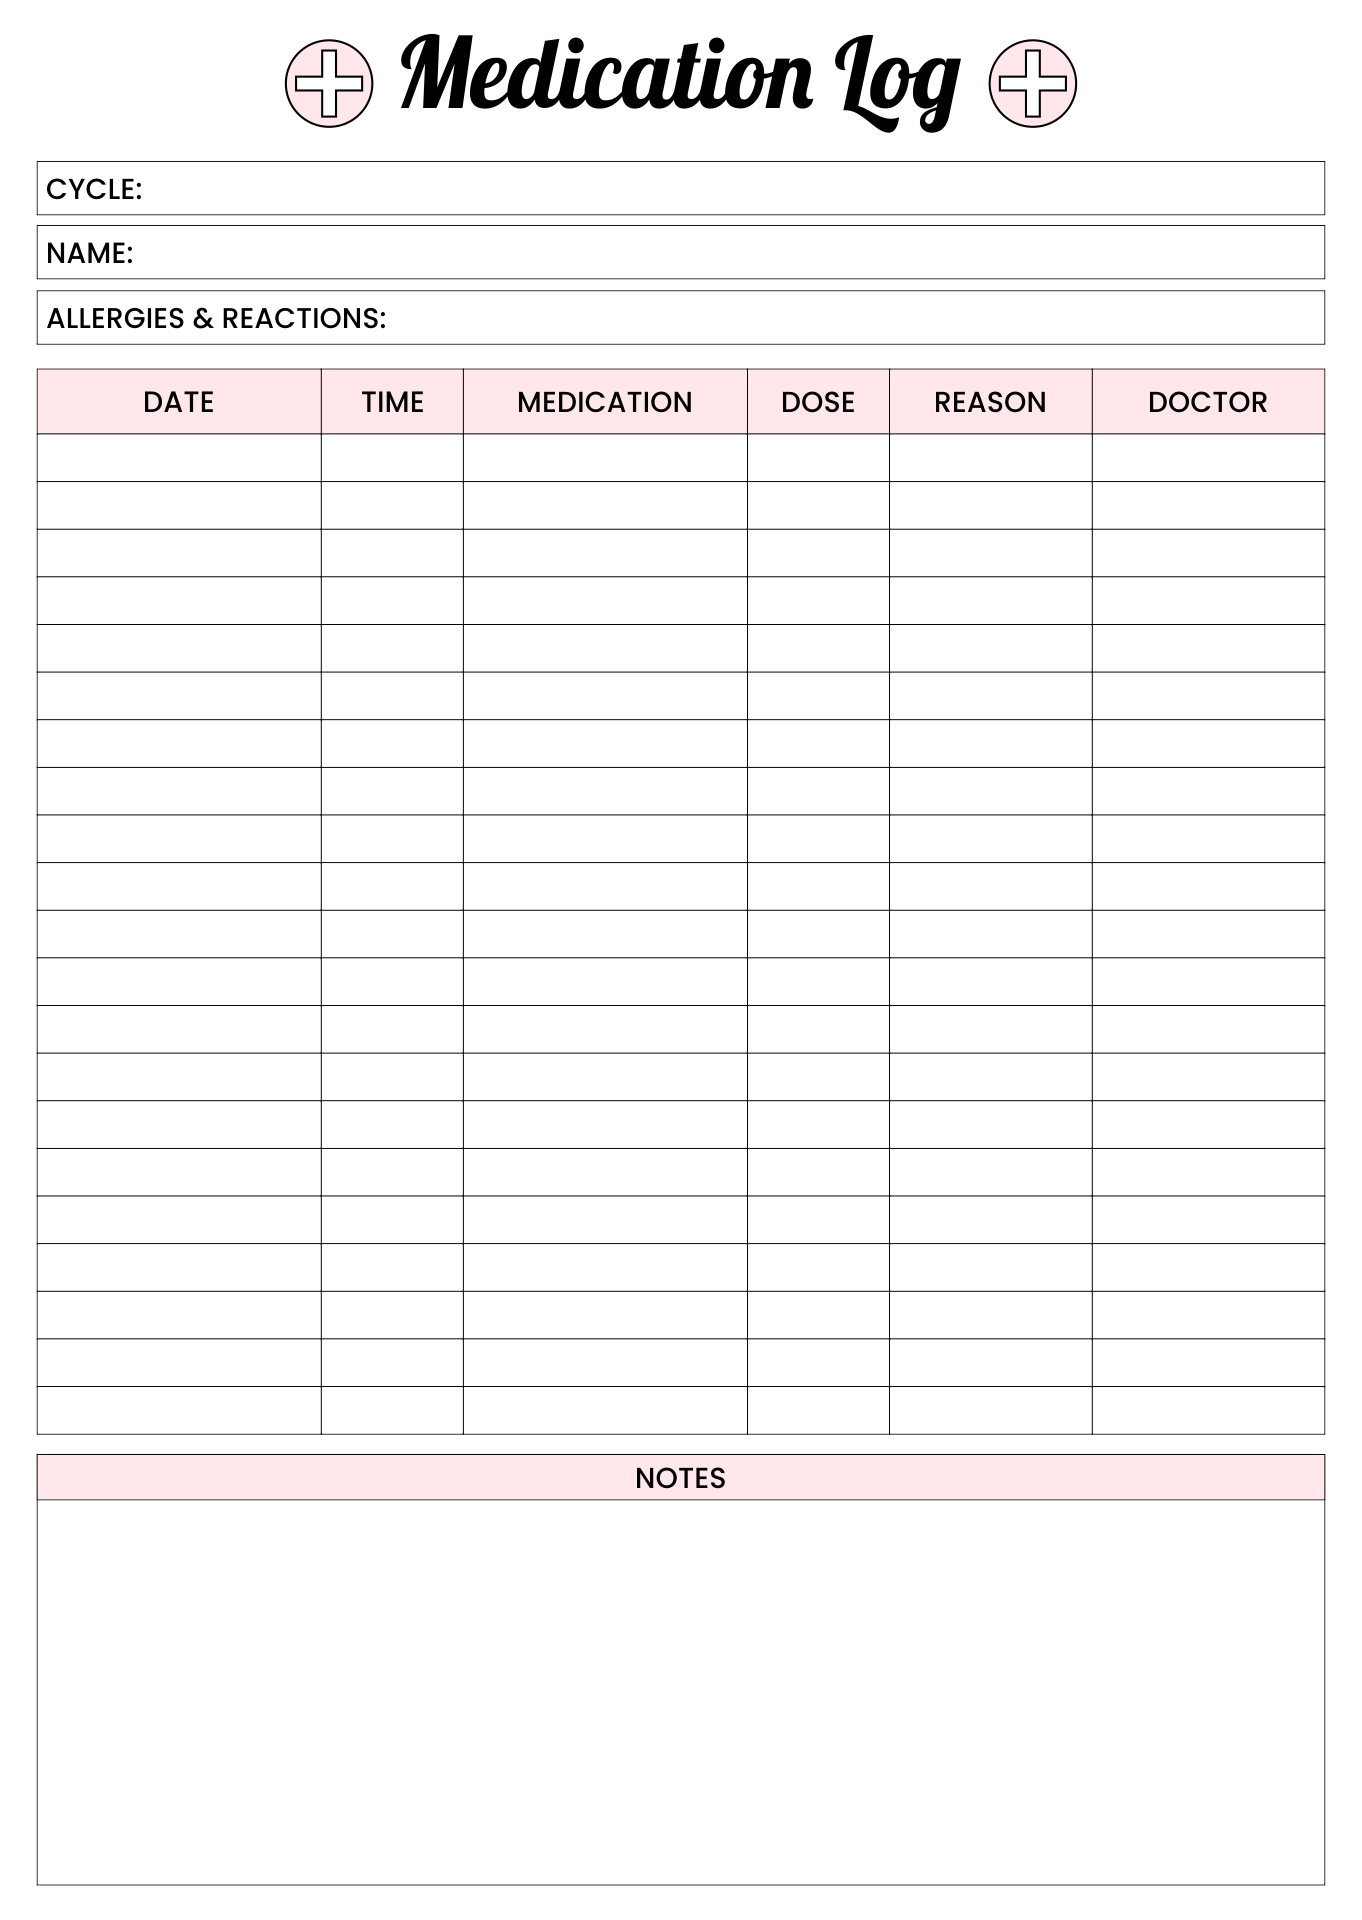 Printable Medication Sheet